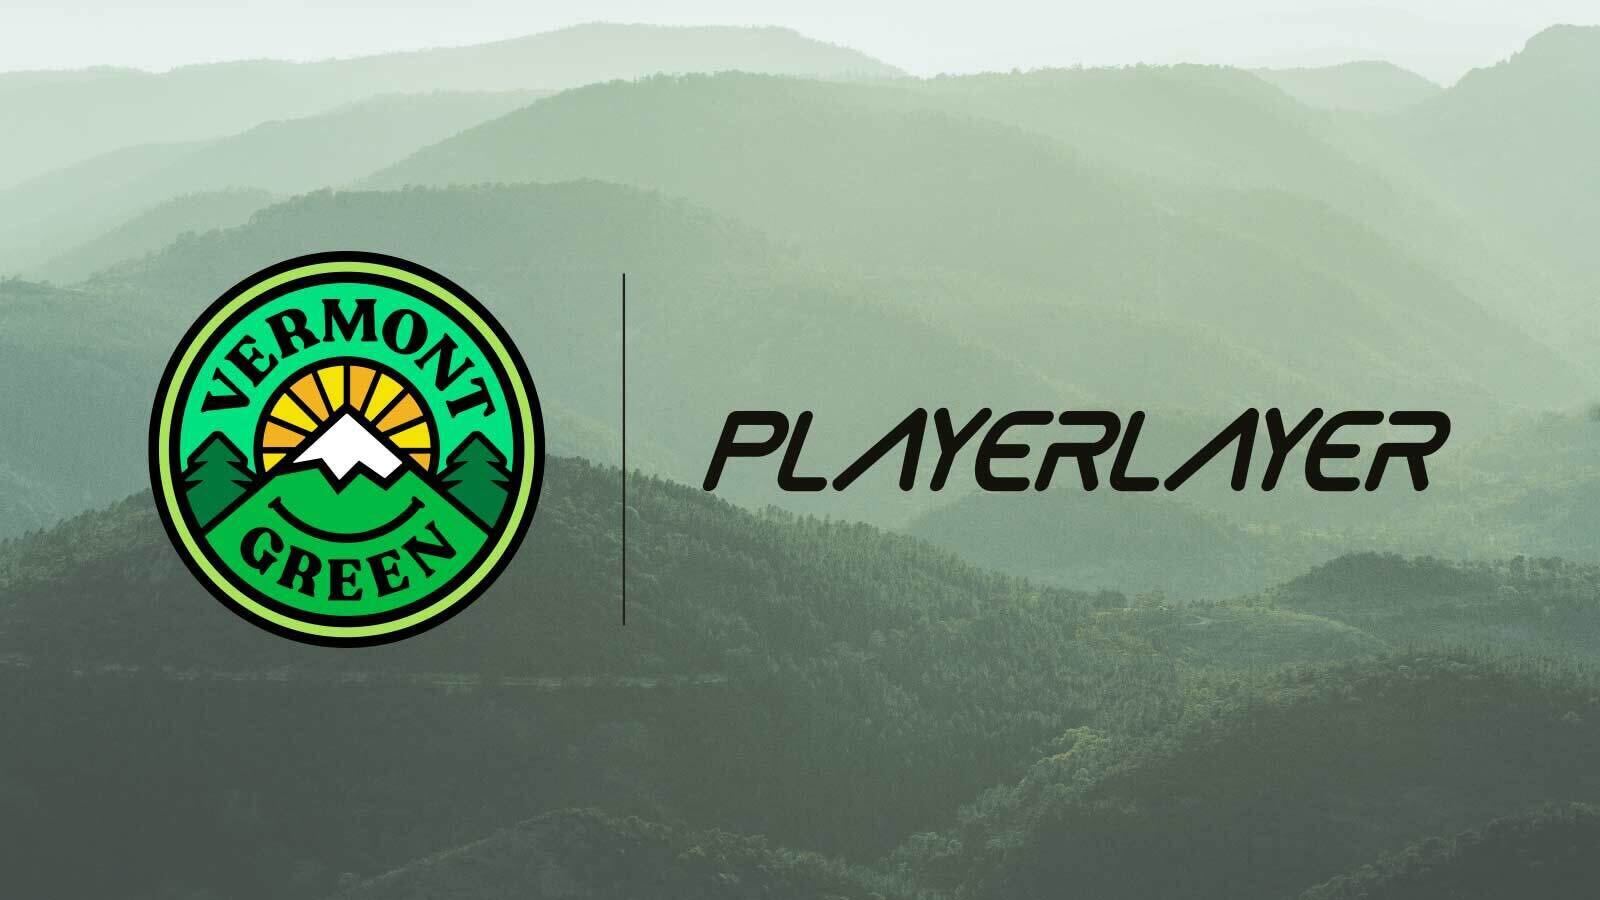 Vermont Green | PlayerLayer